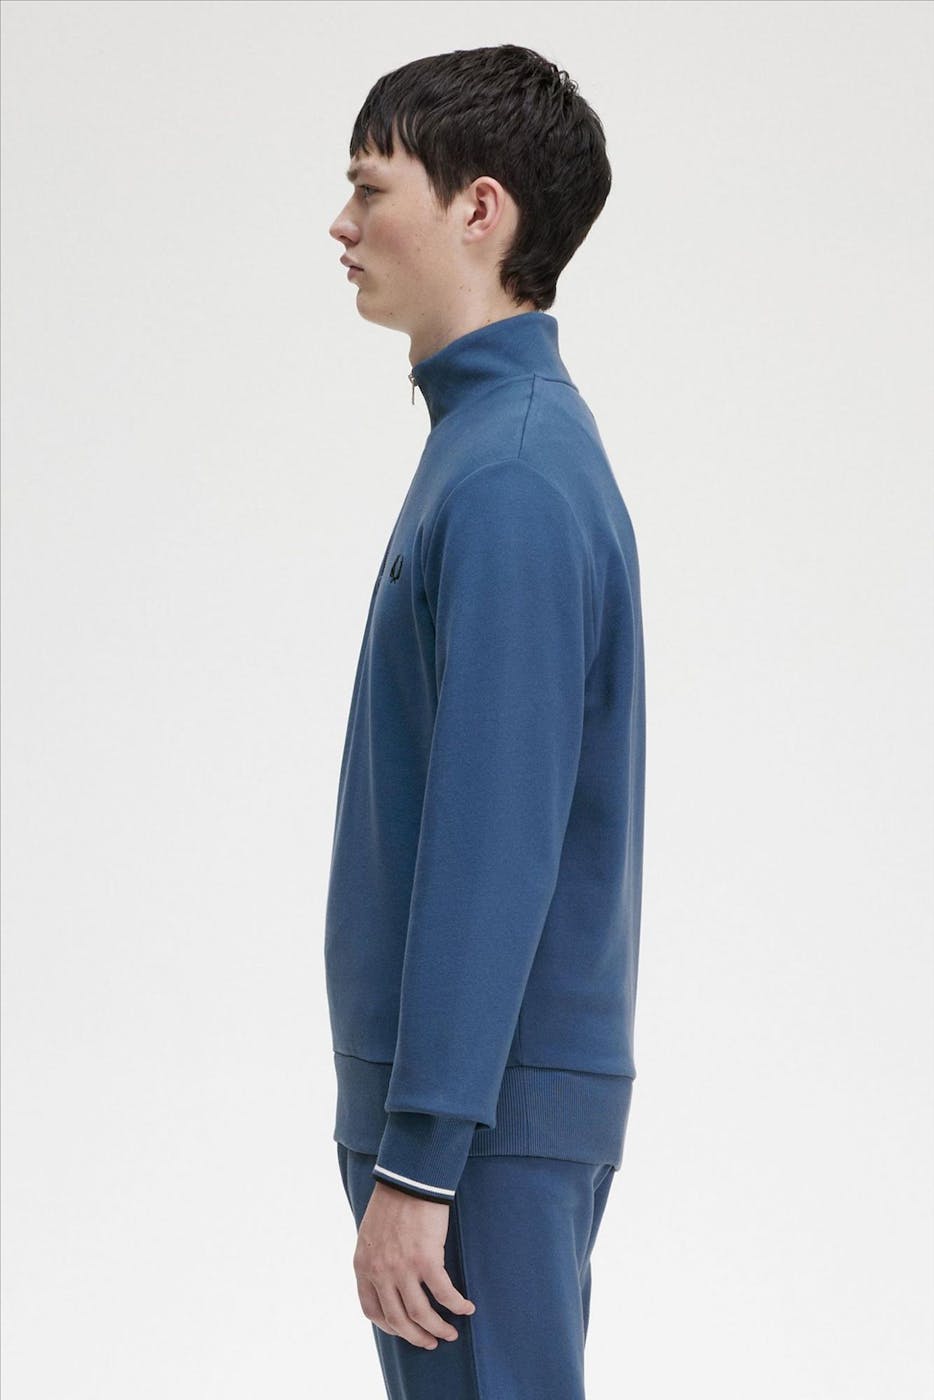 Fred Perry - Blauwe Half Zip sweater